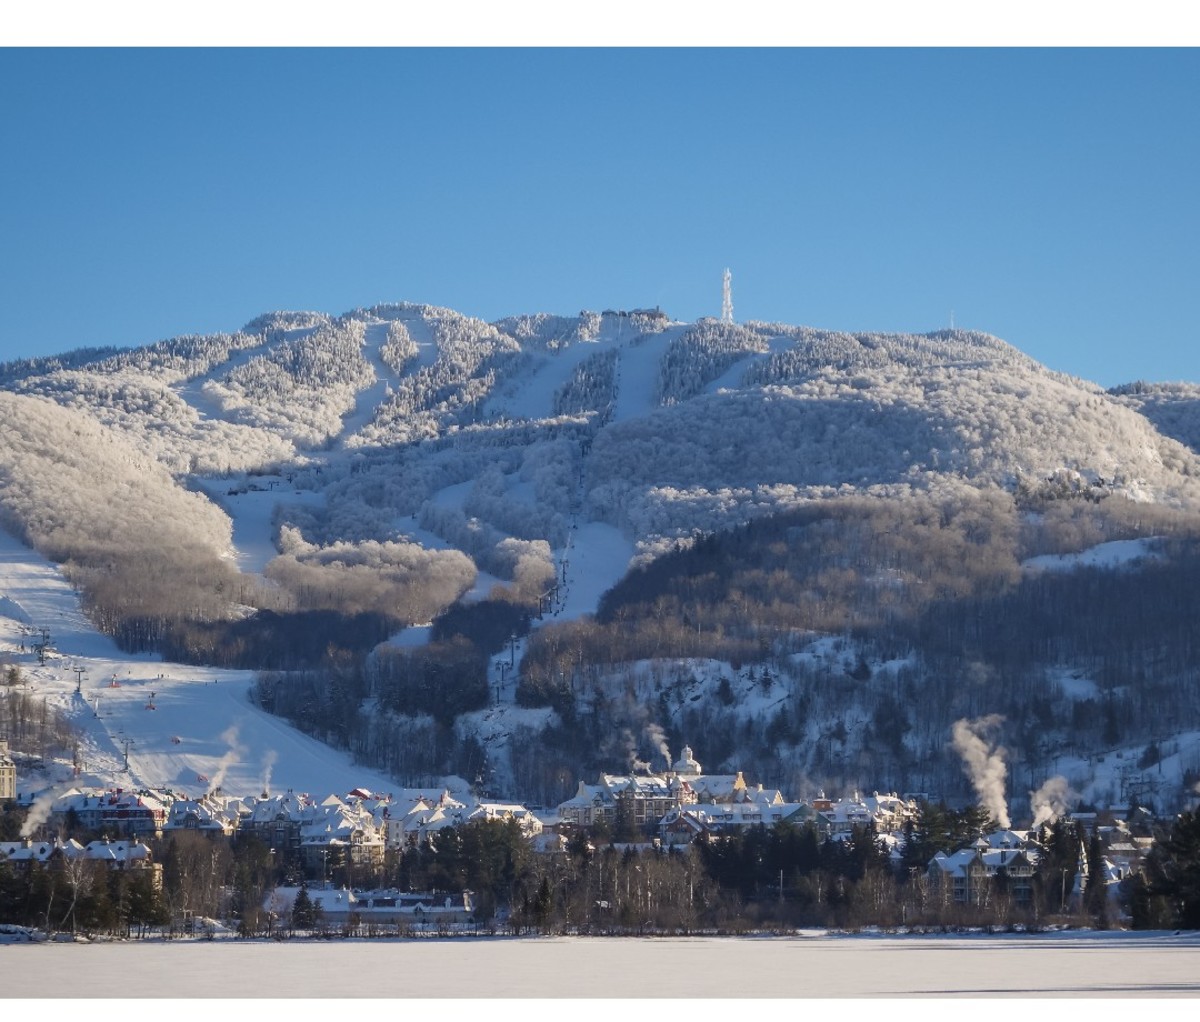 Long shot of the base and ski hill/runs at Quebec's Mont-Tremblant